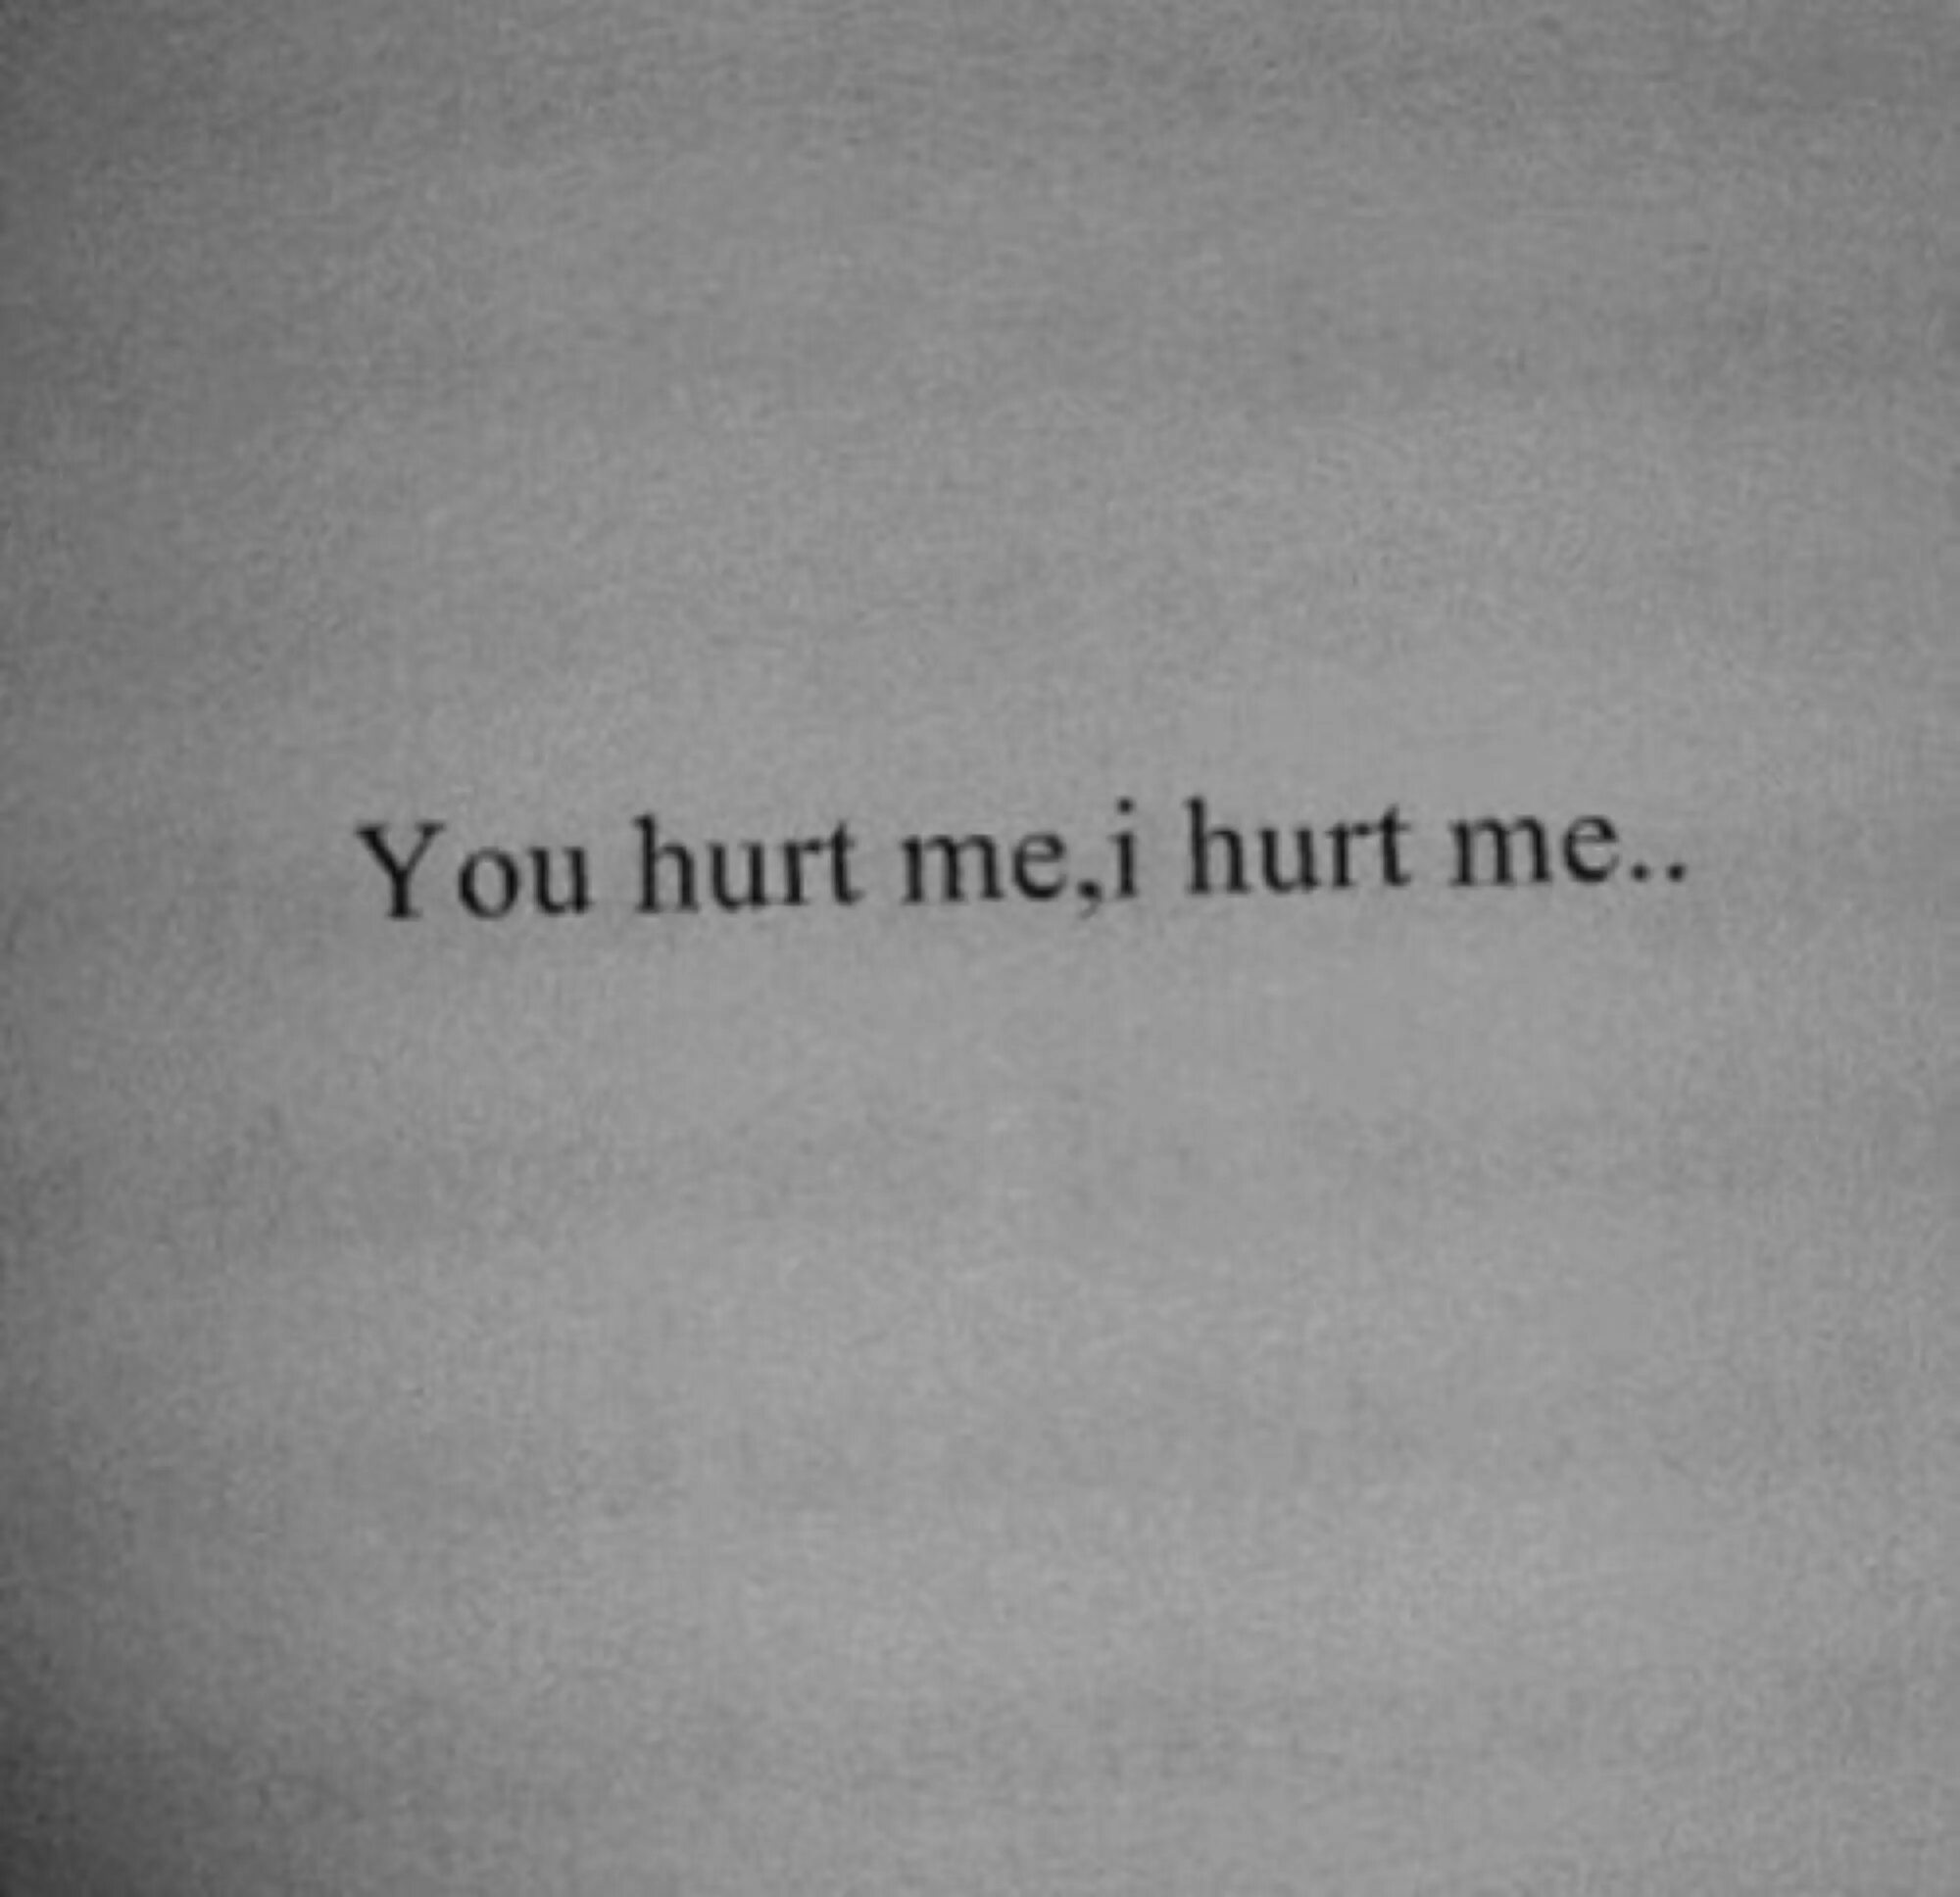 When you hurt i hurt. You hurt me. It hurts картинки. Боль hurts.